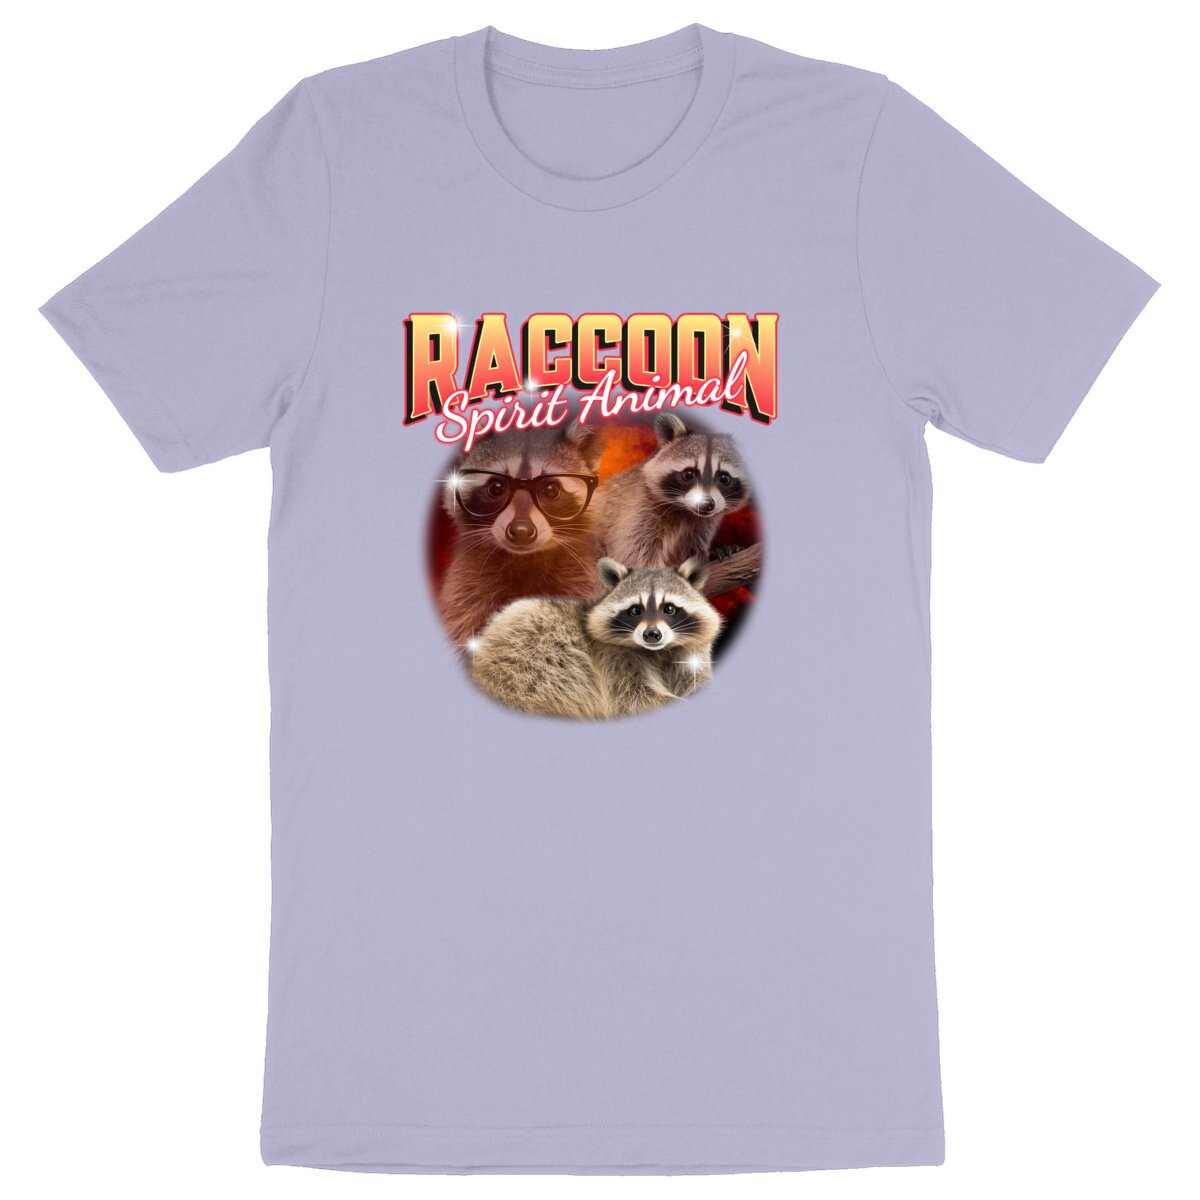 Raccoon Spirit Animal - Organic T-shirt